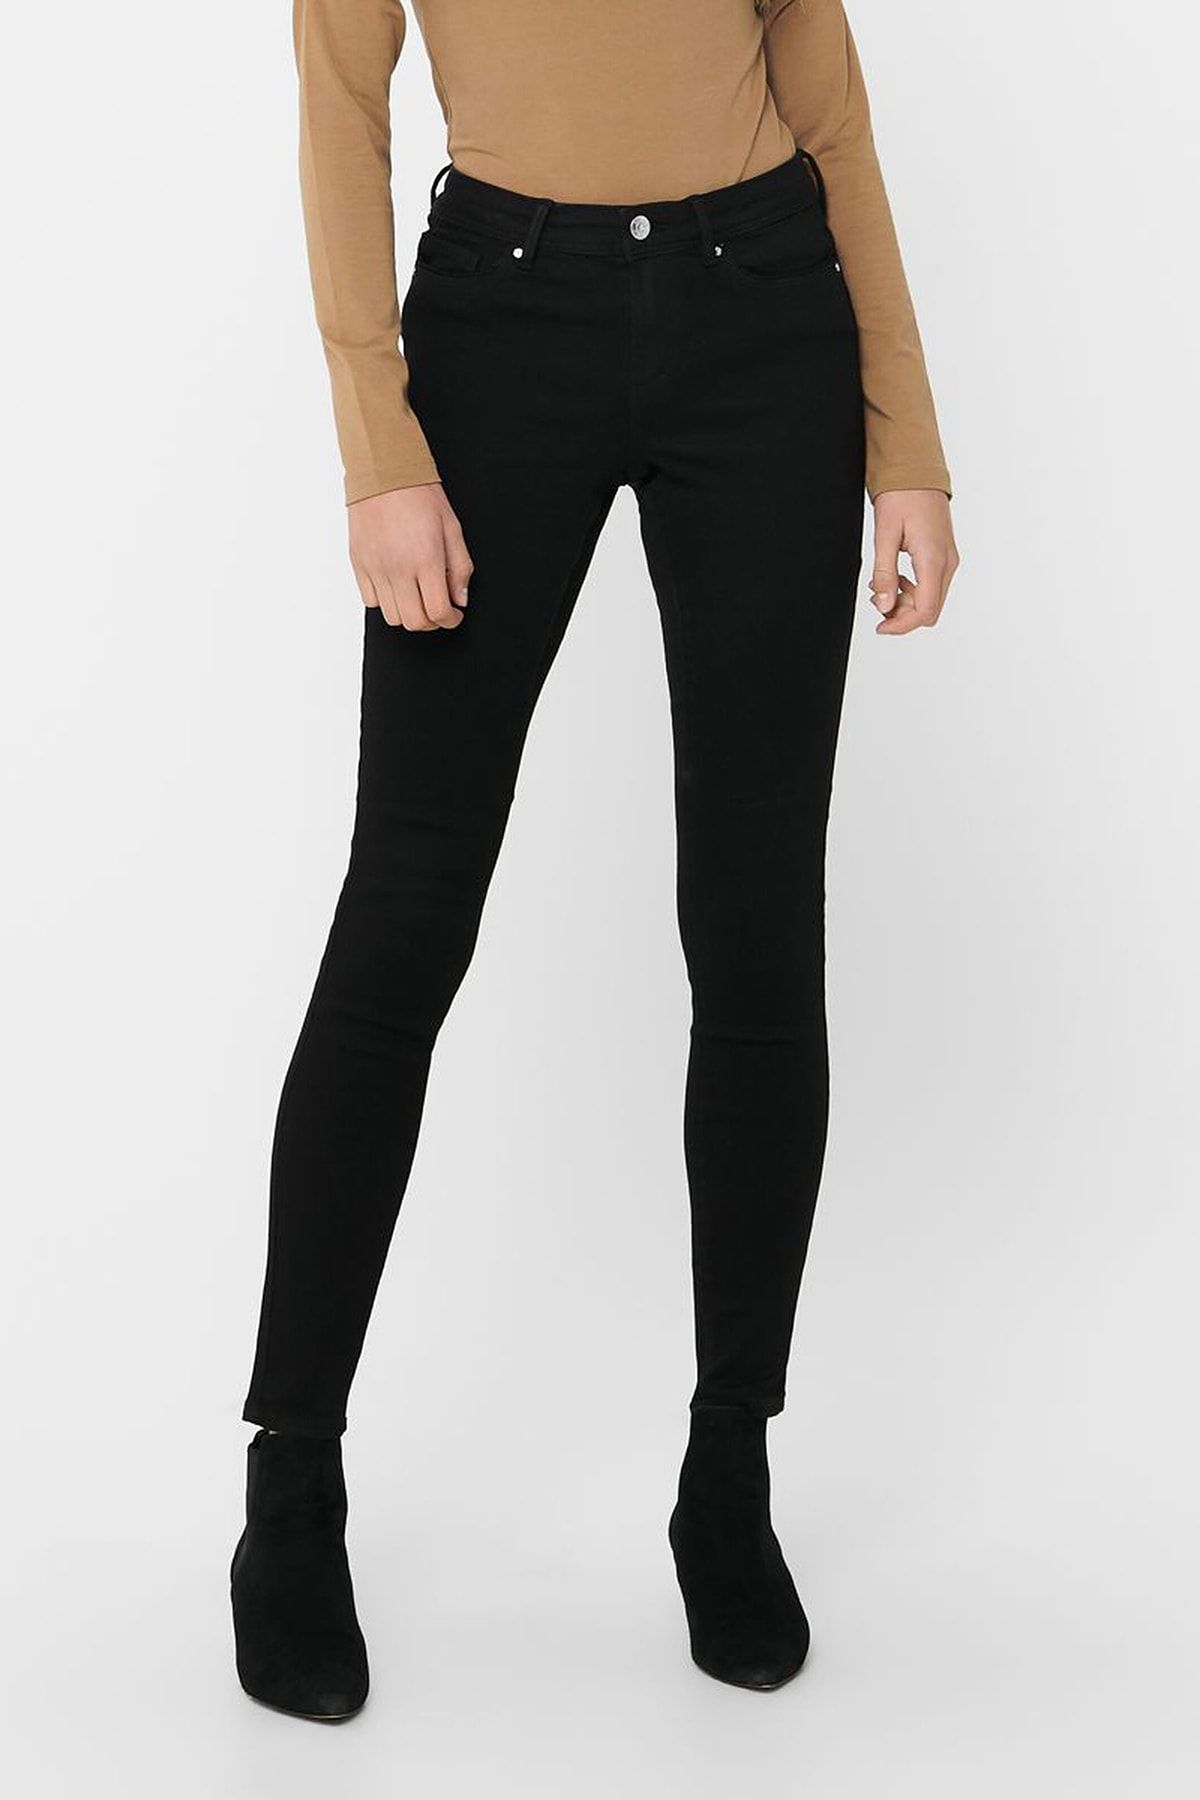 Only Kadın Siyah Normal Bel Skinny Fit Jeans Kot Pantolon 15220118